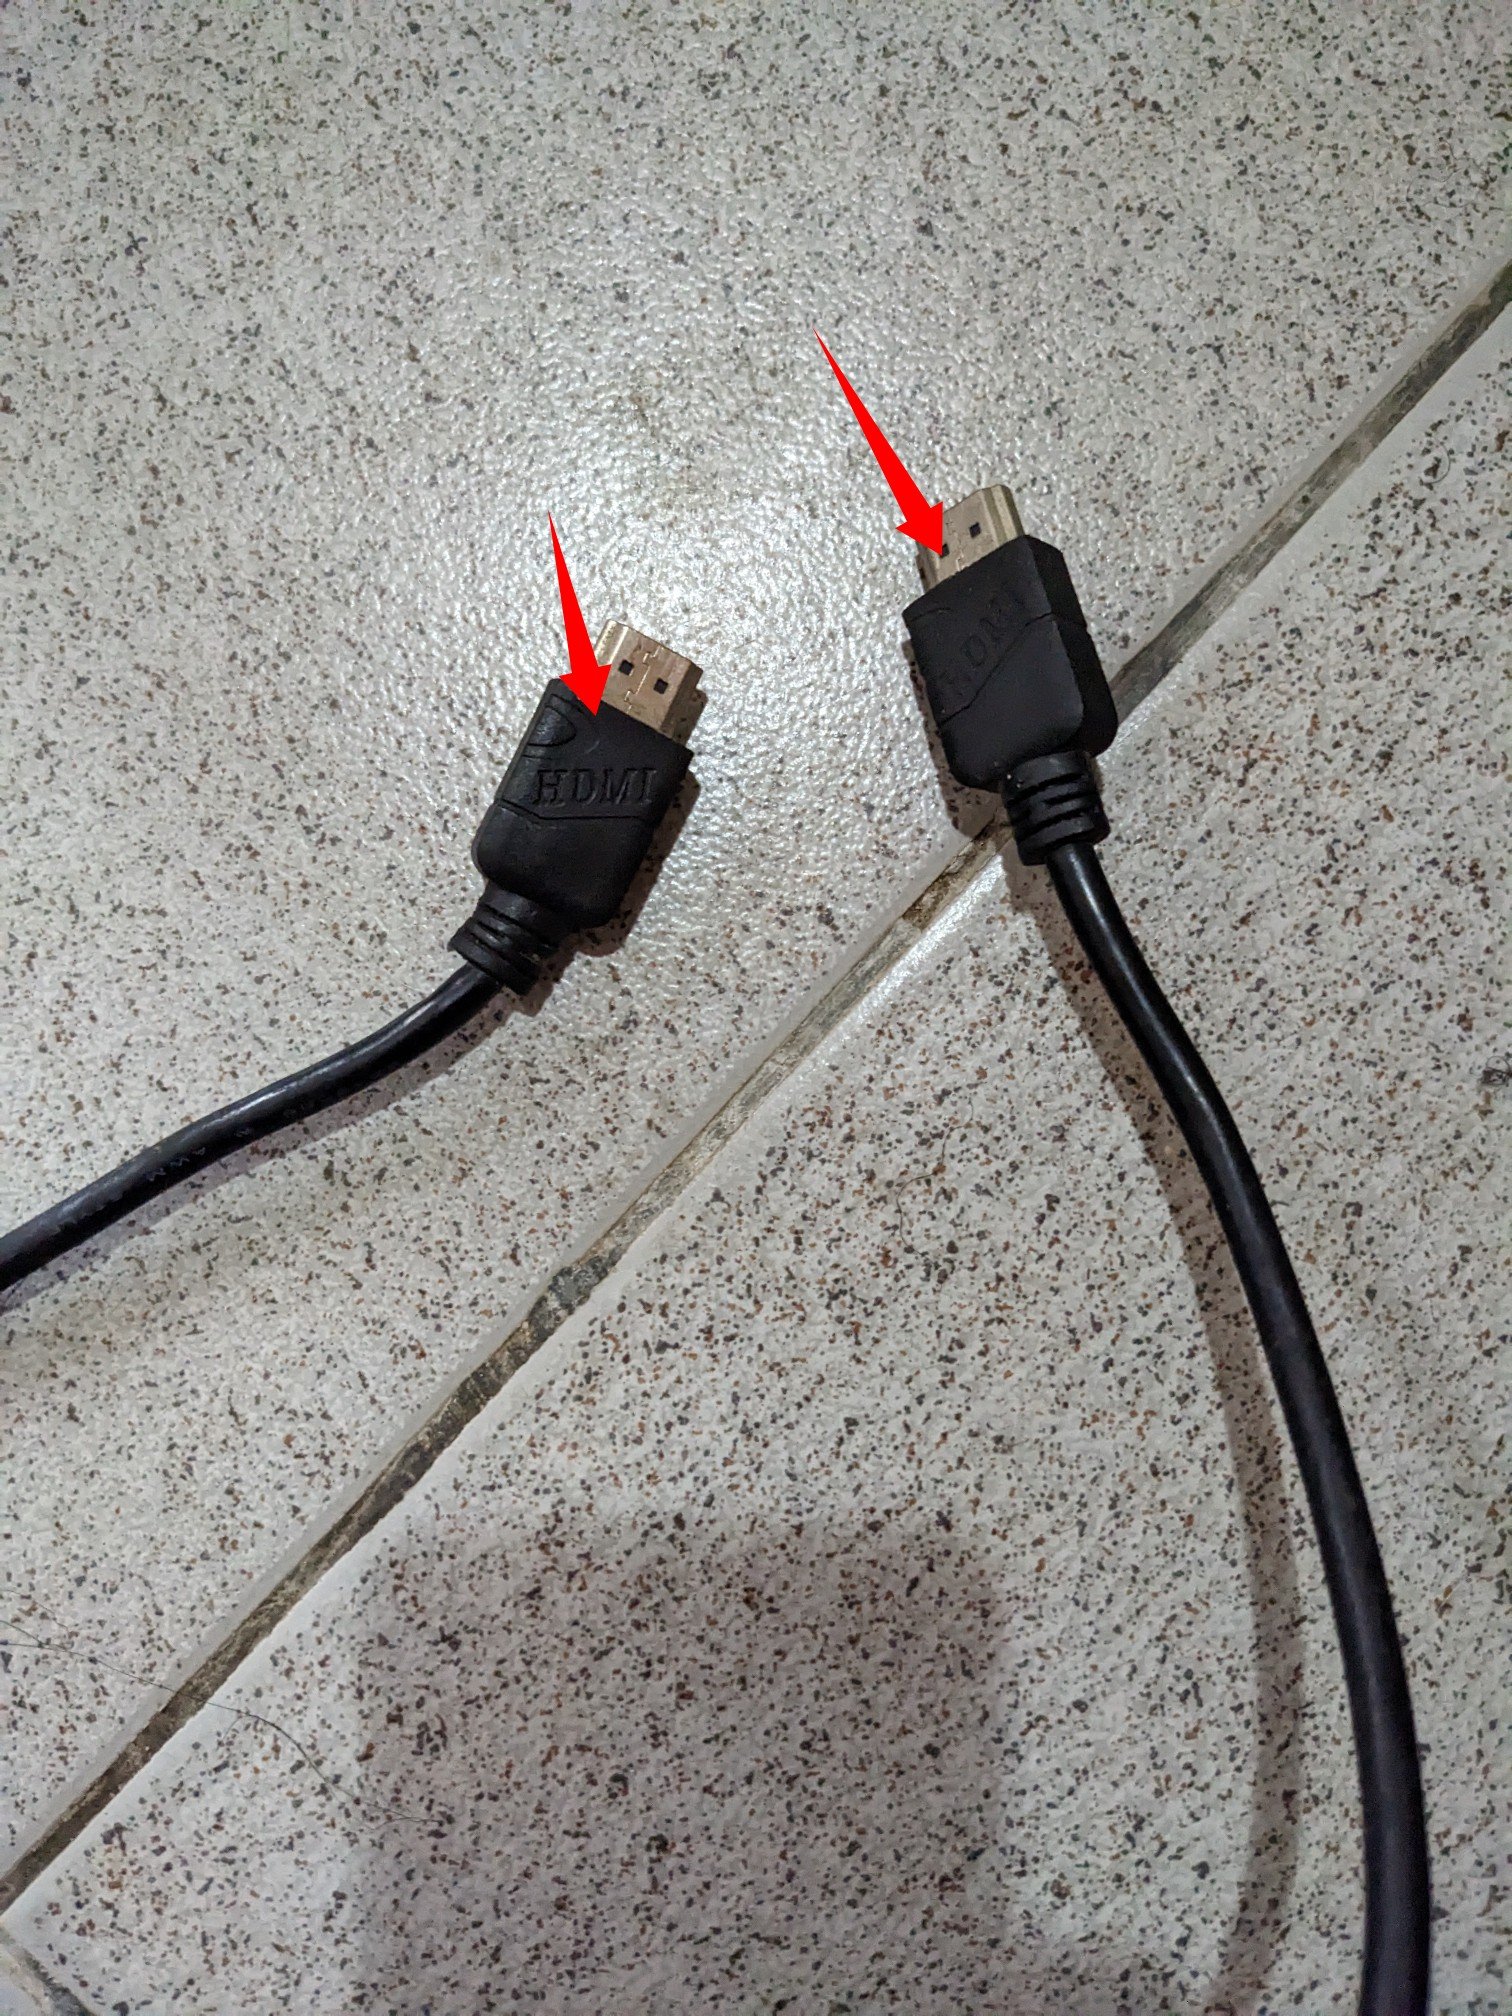 HDMI Cable 